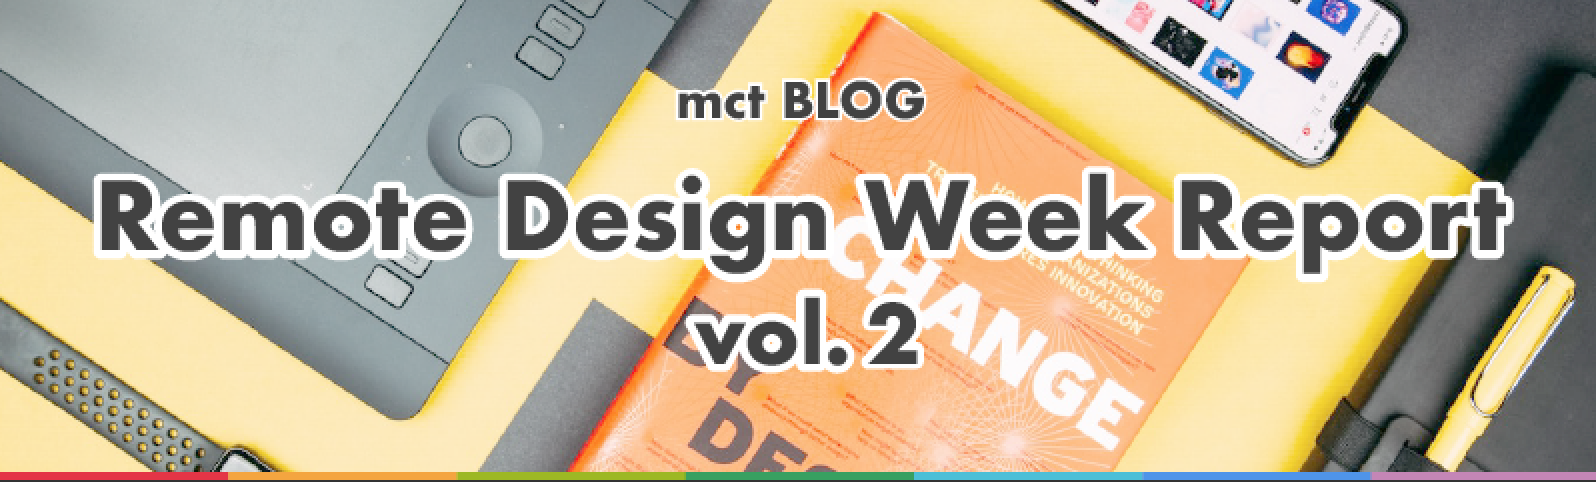 remote_design_week_vol2